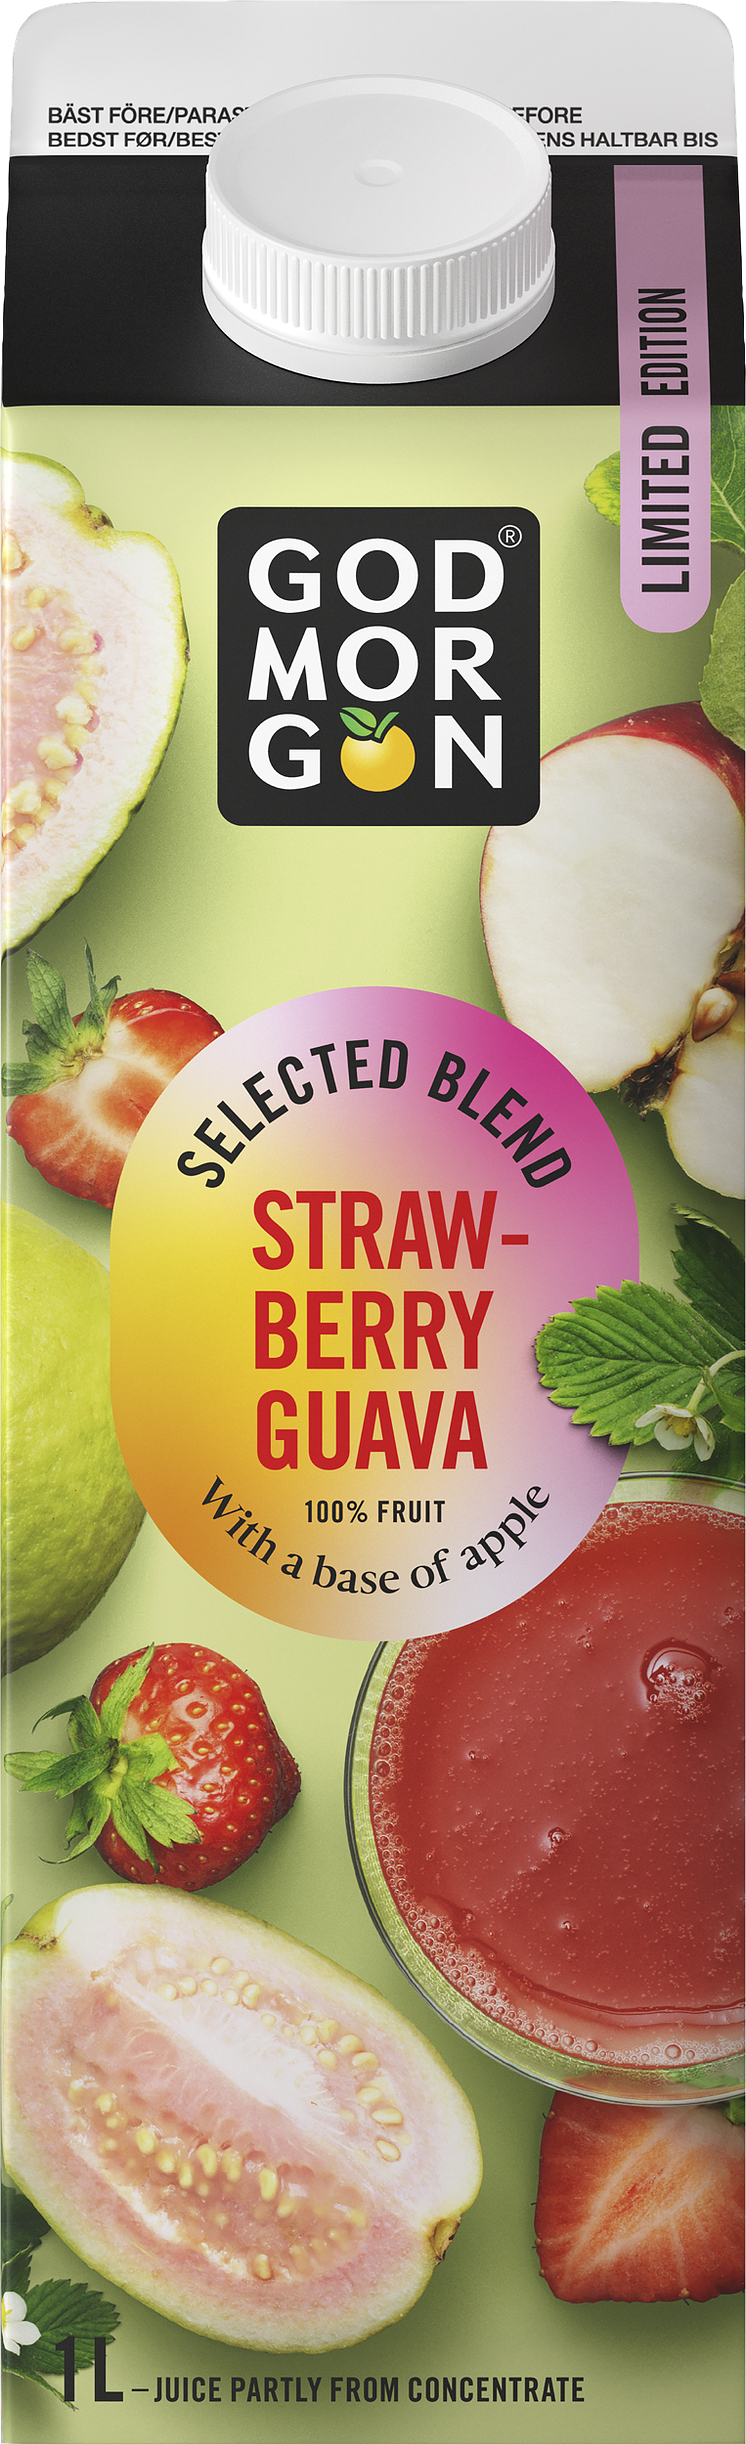 God Morgon Selected Blend Strawberry Guava